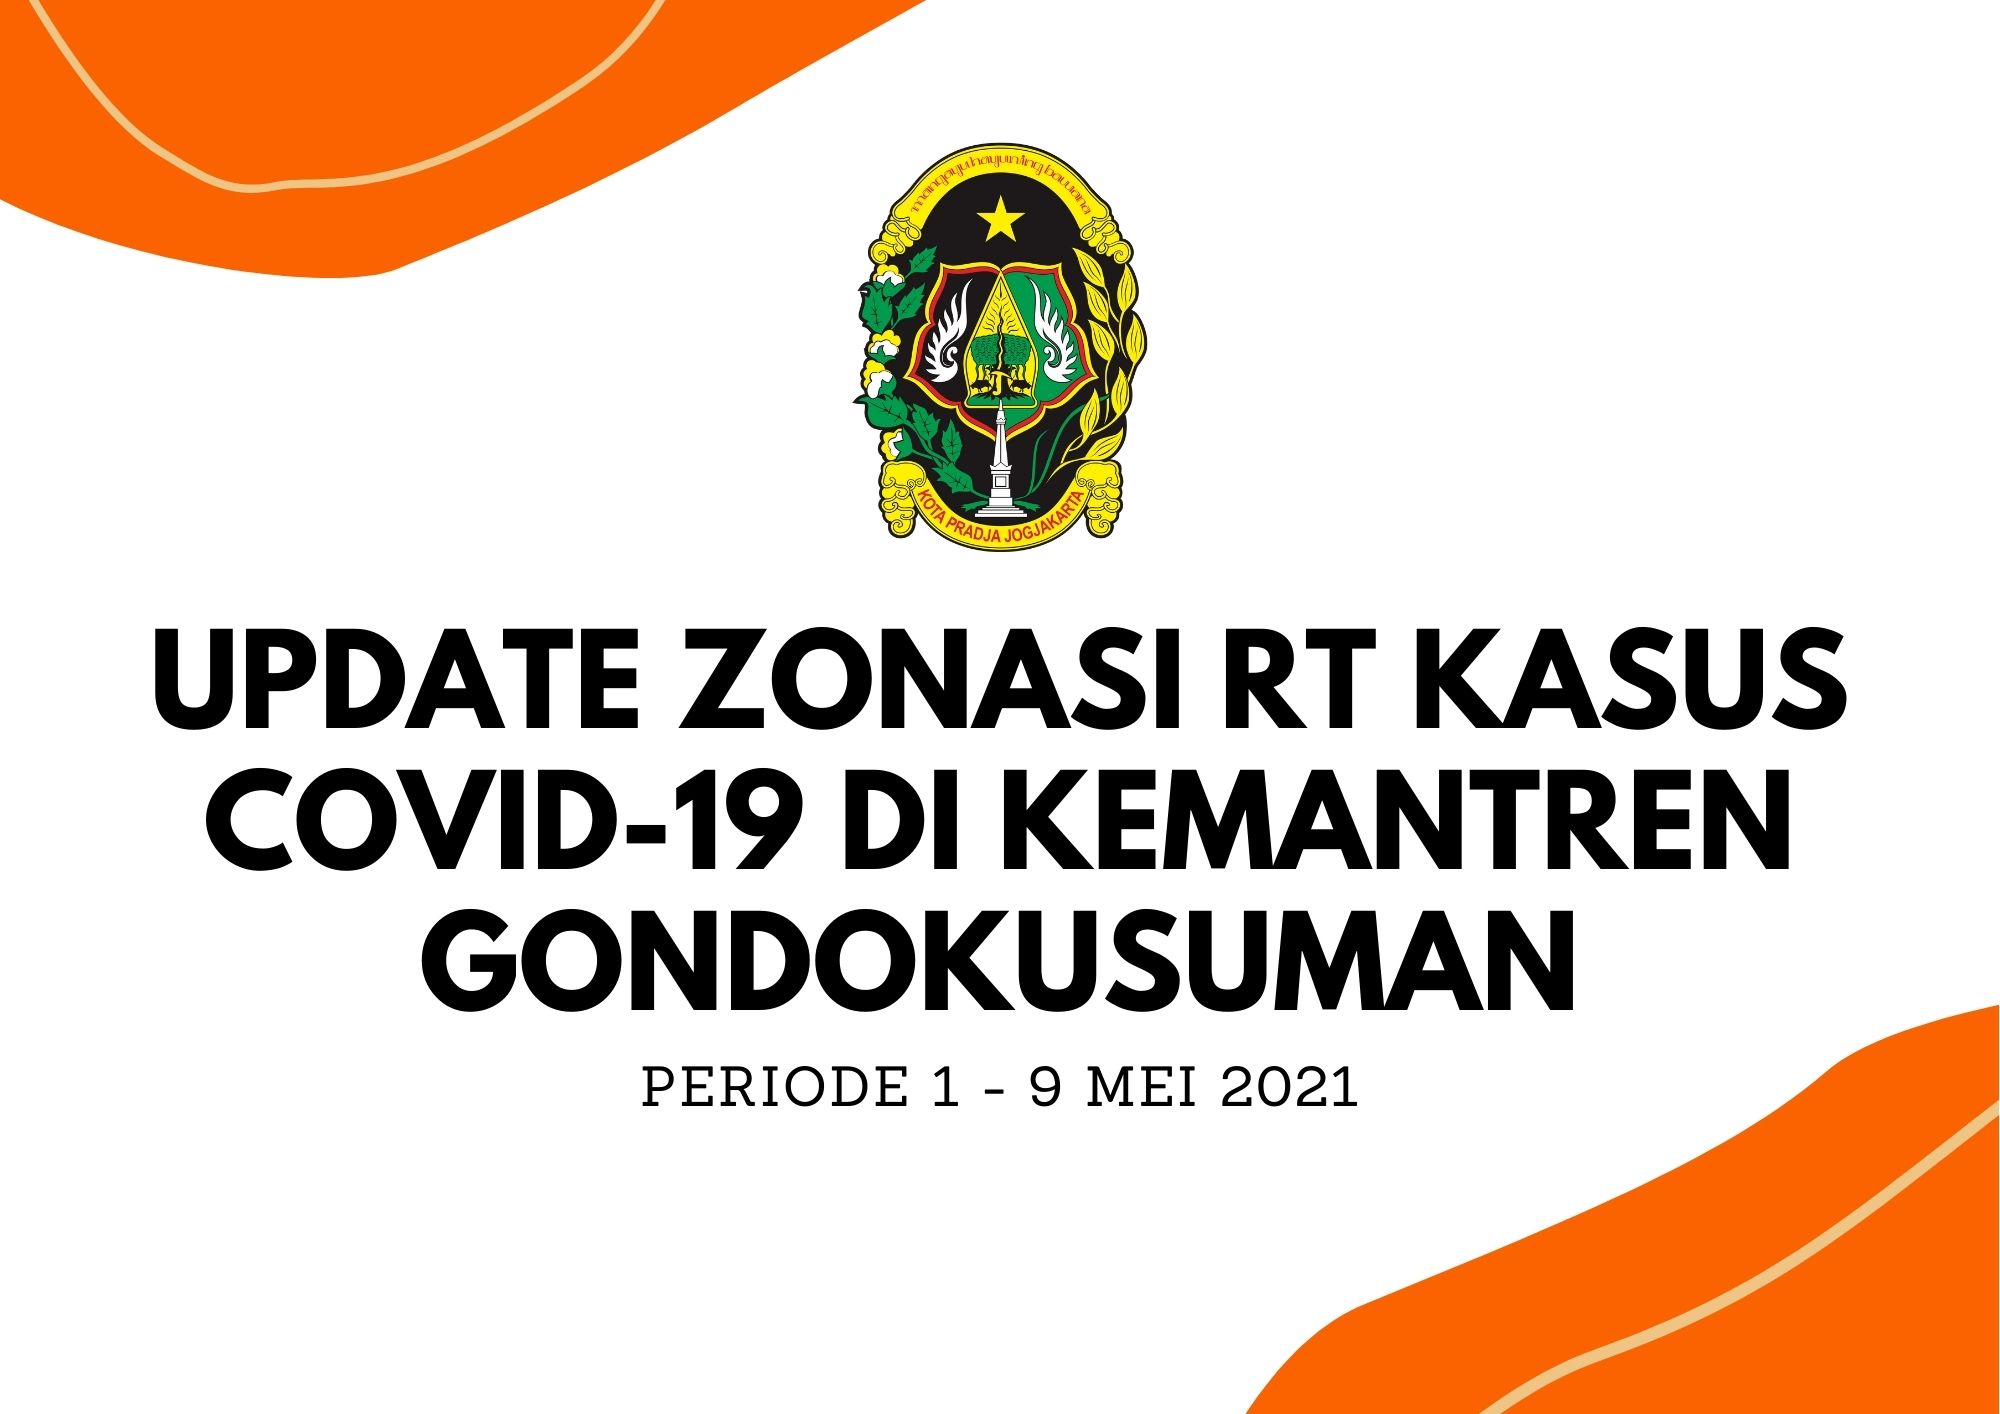 Update Zonasi RT Kasus Covid 19 periode 1 - 9 Mei 2021 Kemantren Gondokusuman